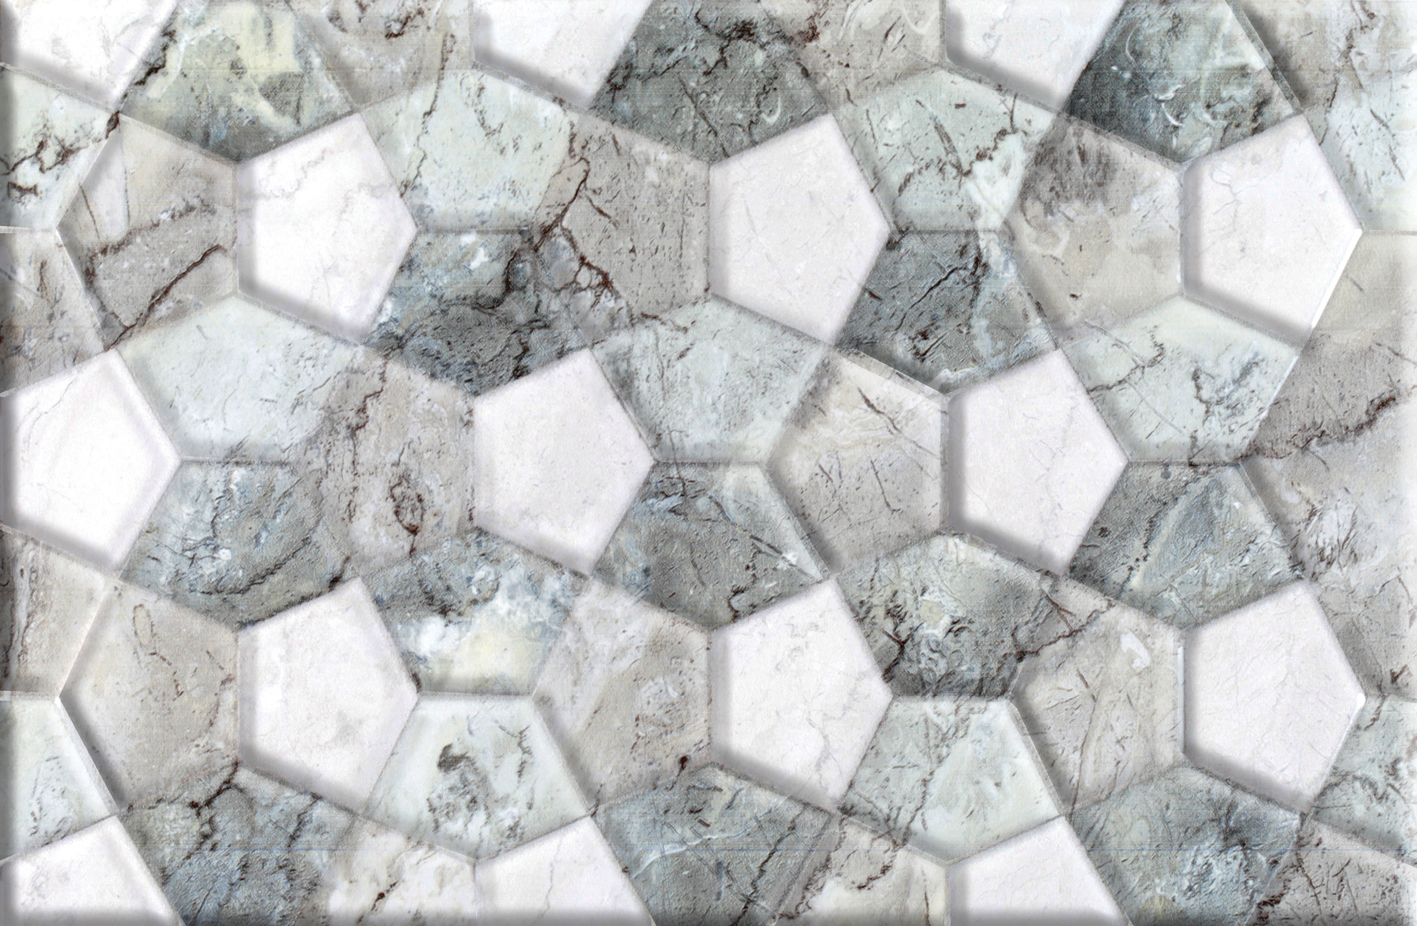 Green Marble Tiles for Bathroom Tiles, Kitchen Tiles, Accent Tiles